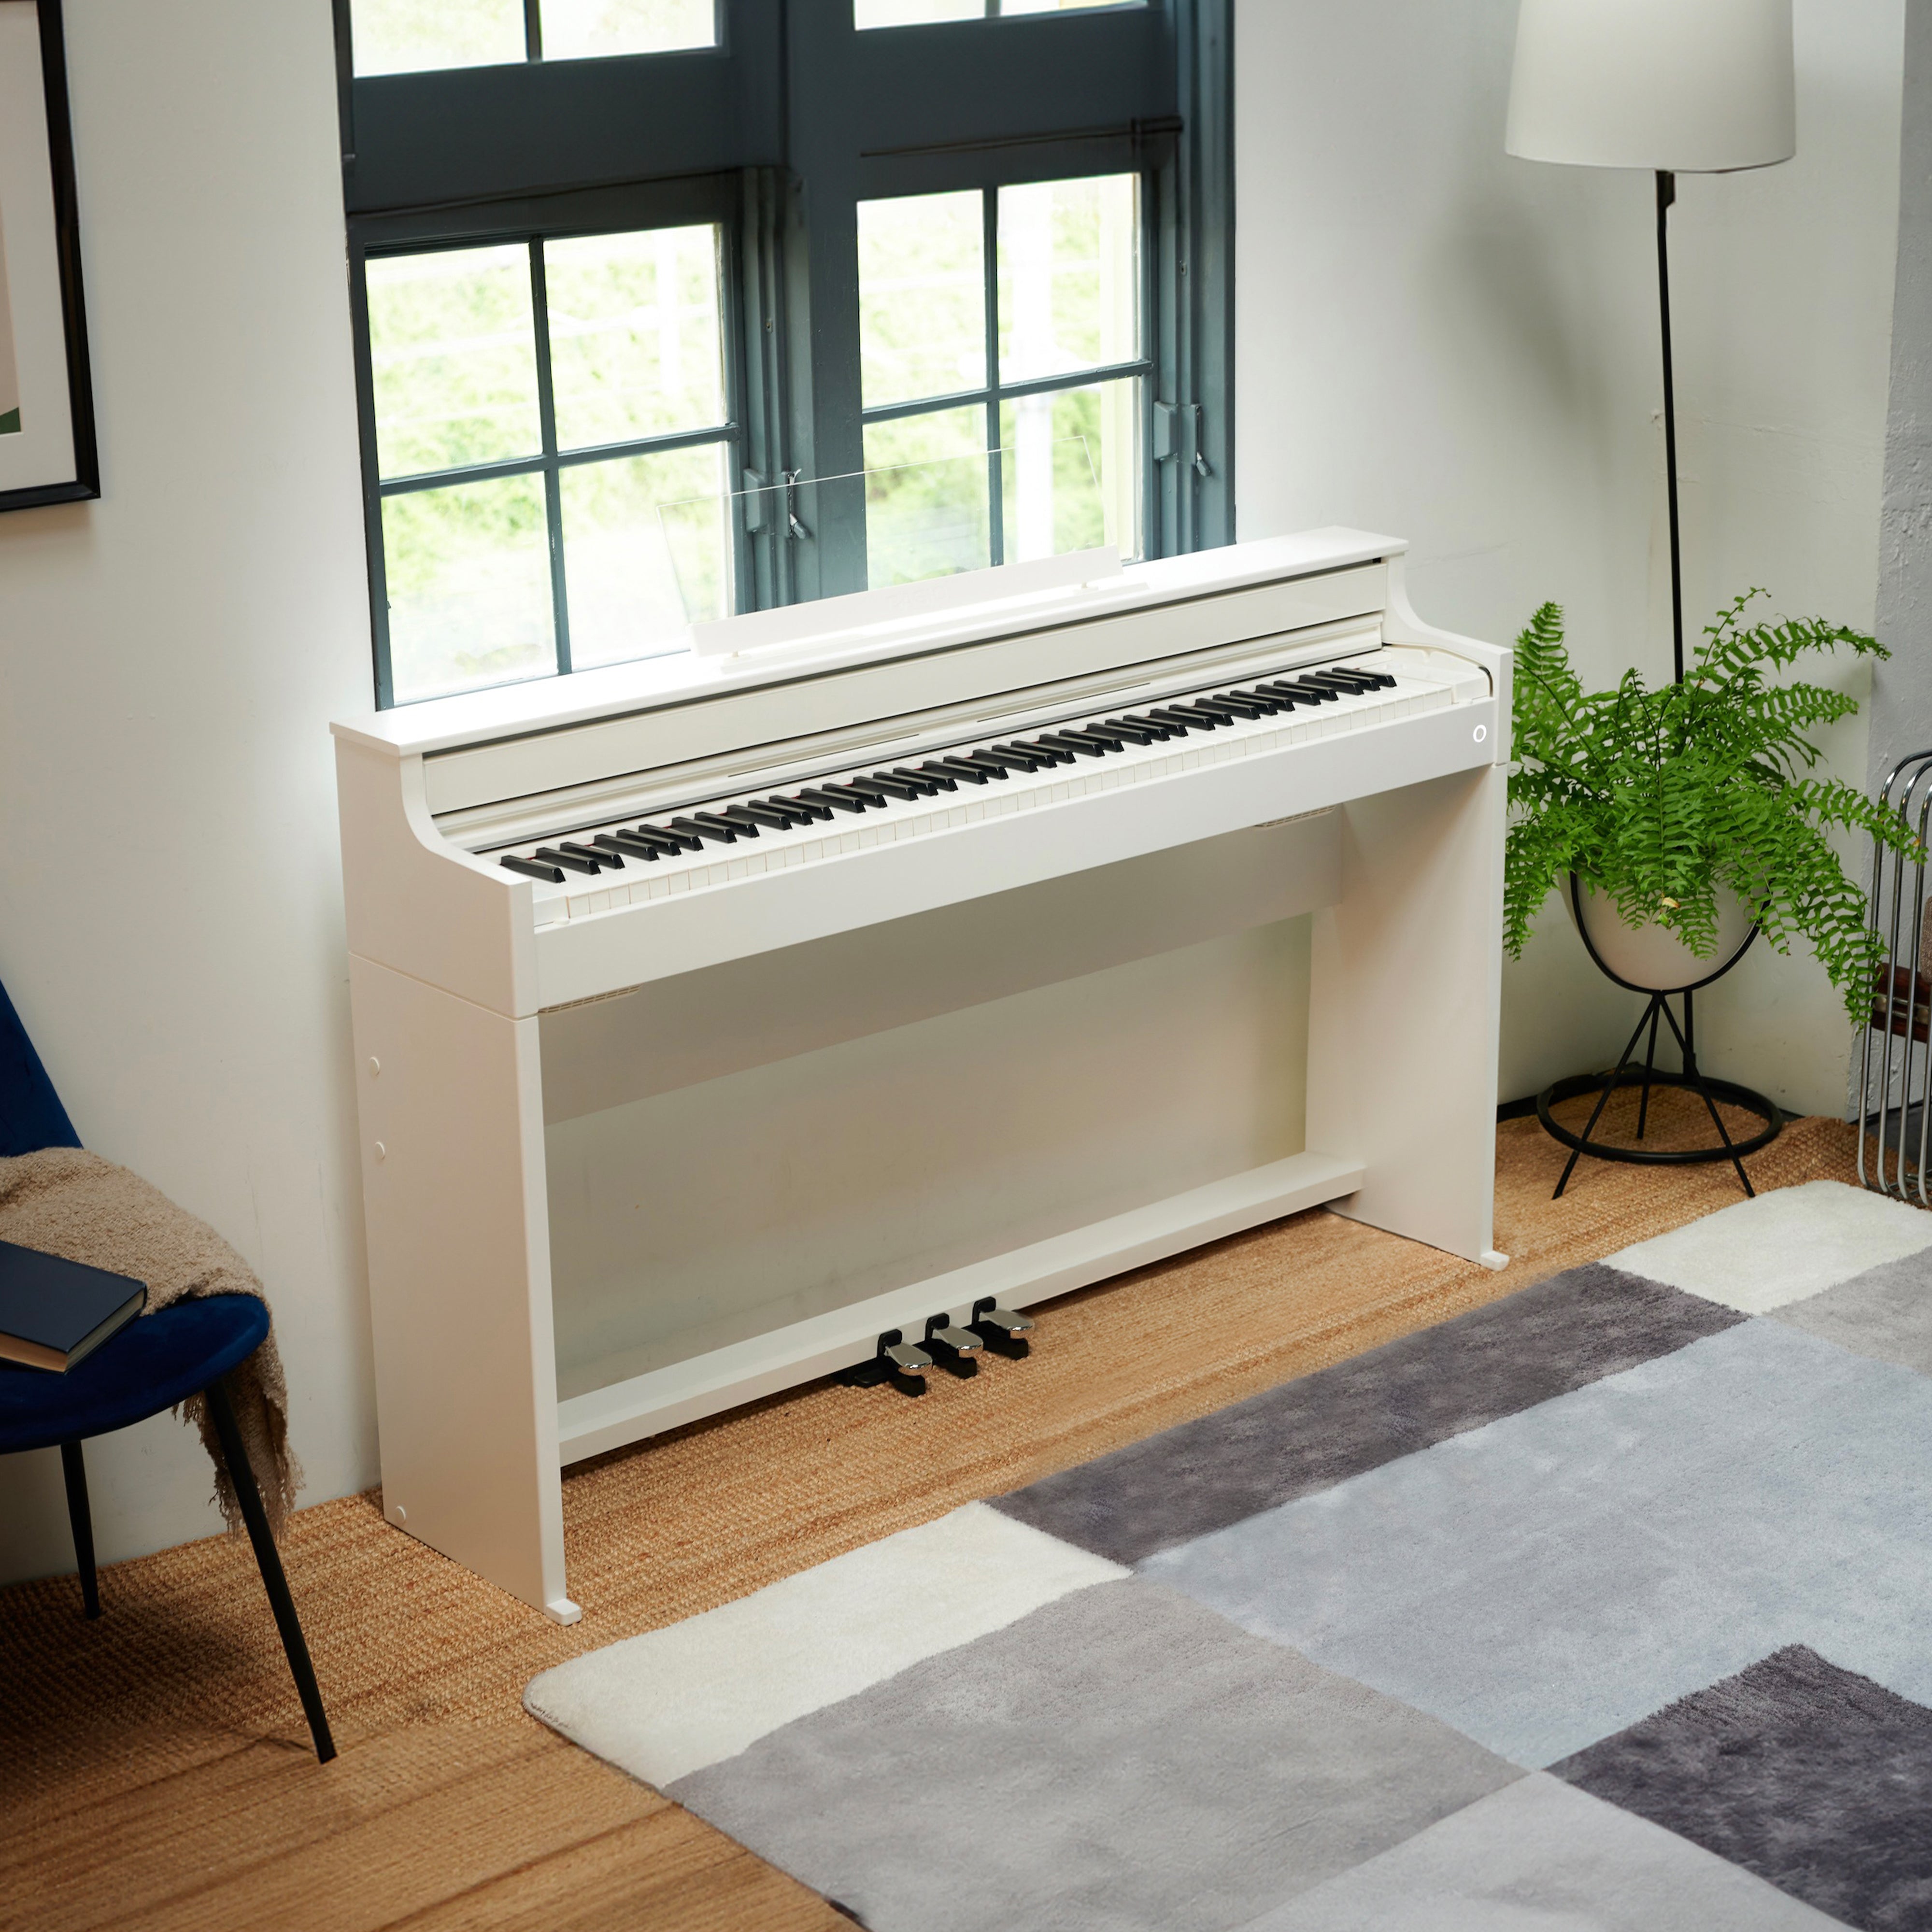 Casio Celviano AP-S450 Digital Piano - White - in a quaint living space